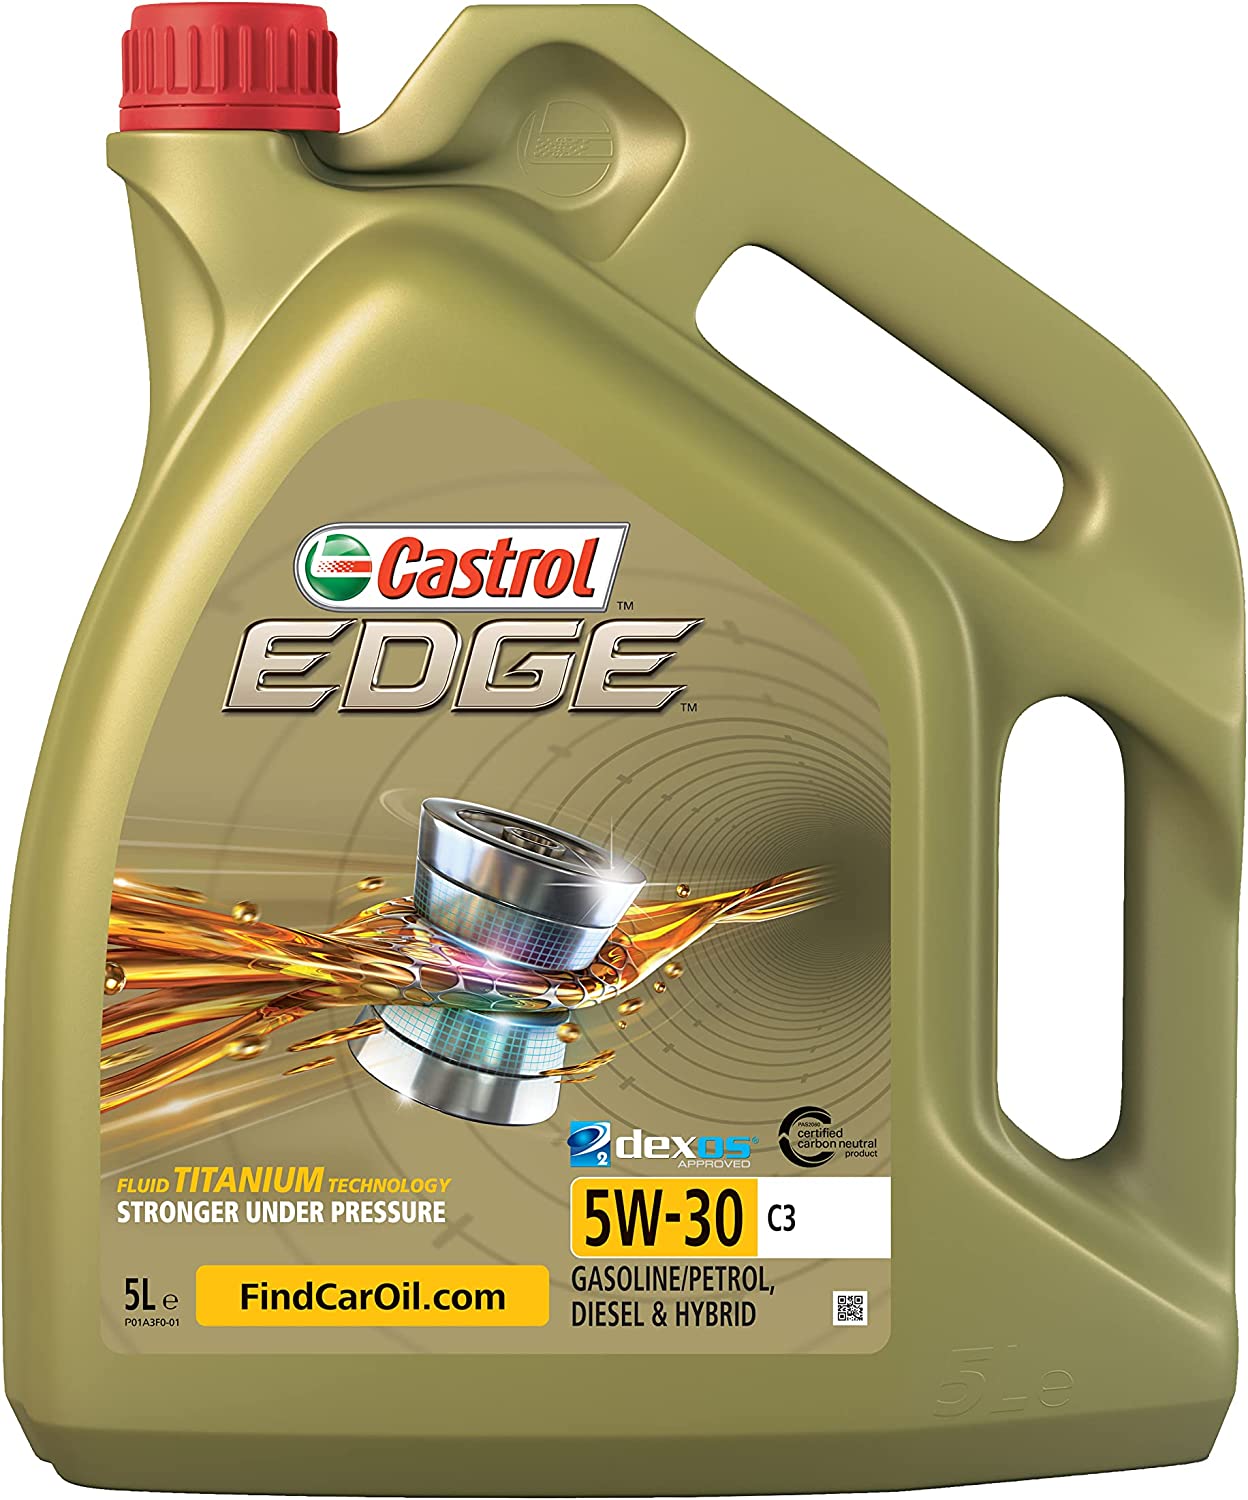 chollo Castrol EDGE 5W-30 C3 Aceite de Motor 5L